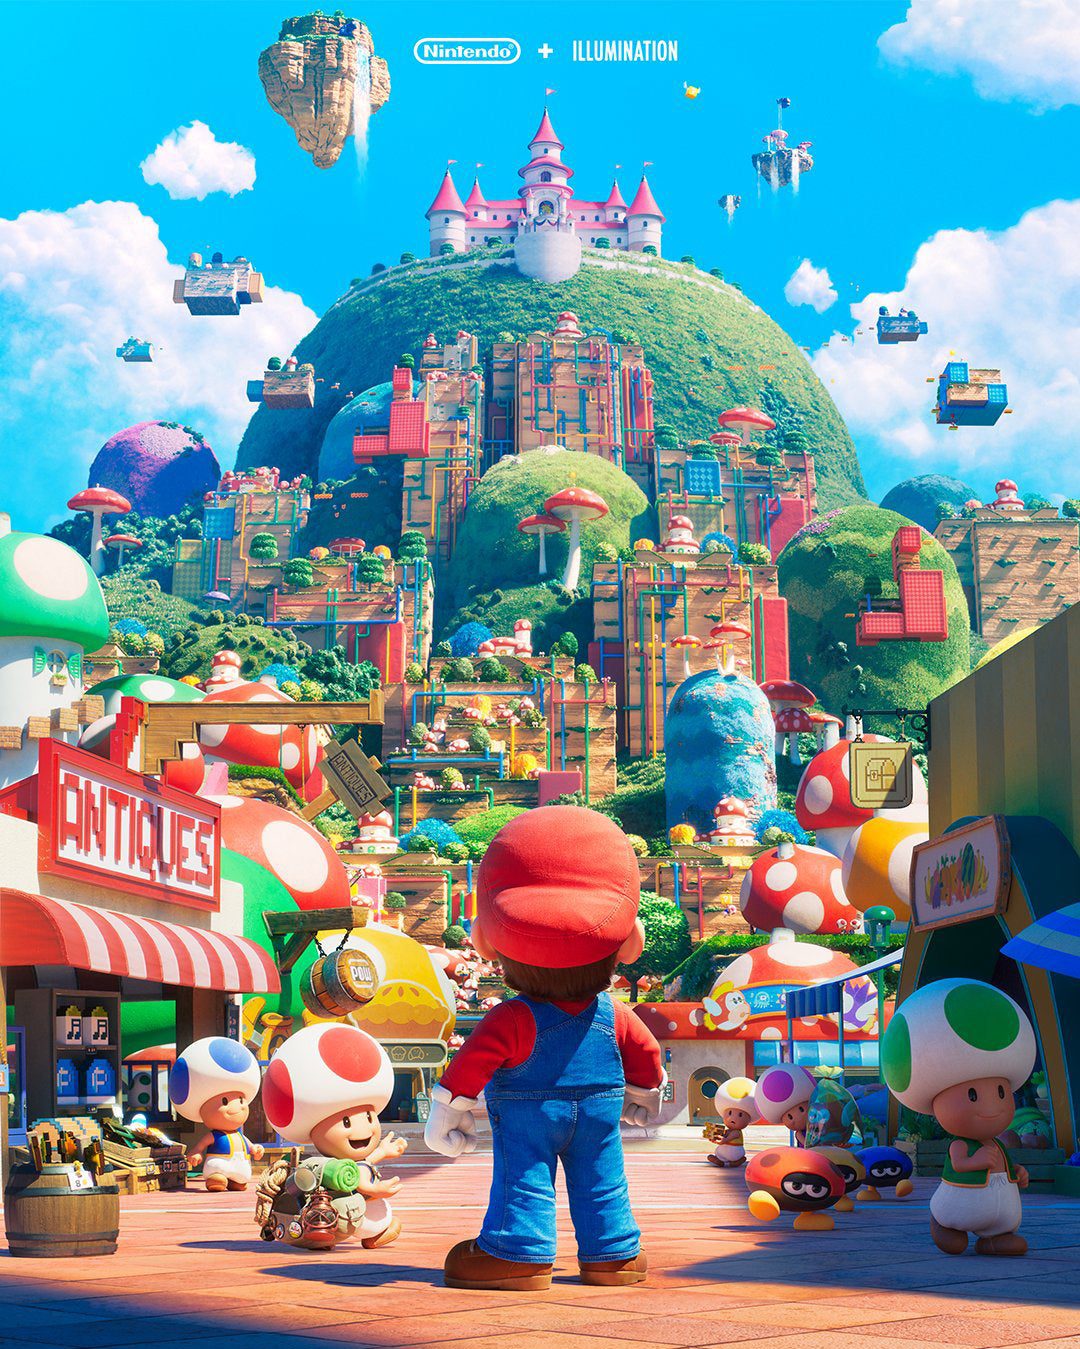 The Super Mario Bros movie poster